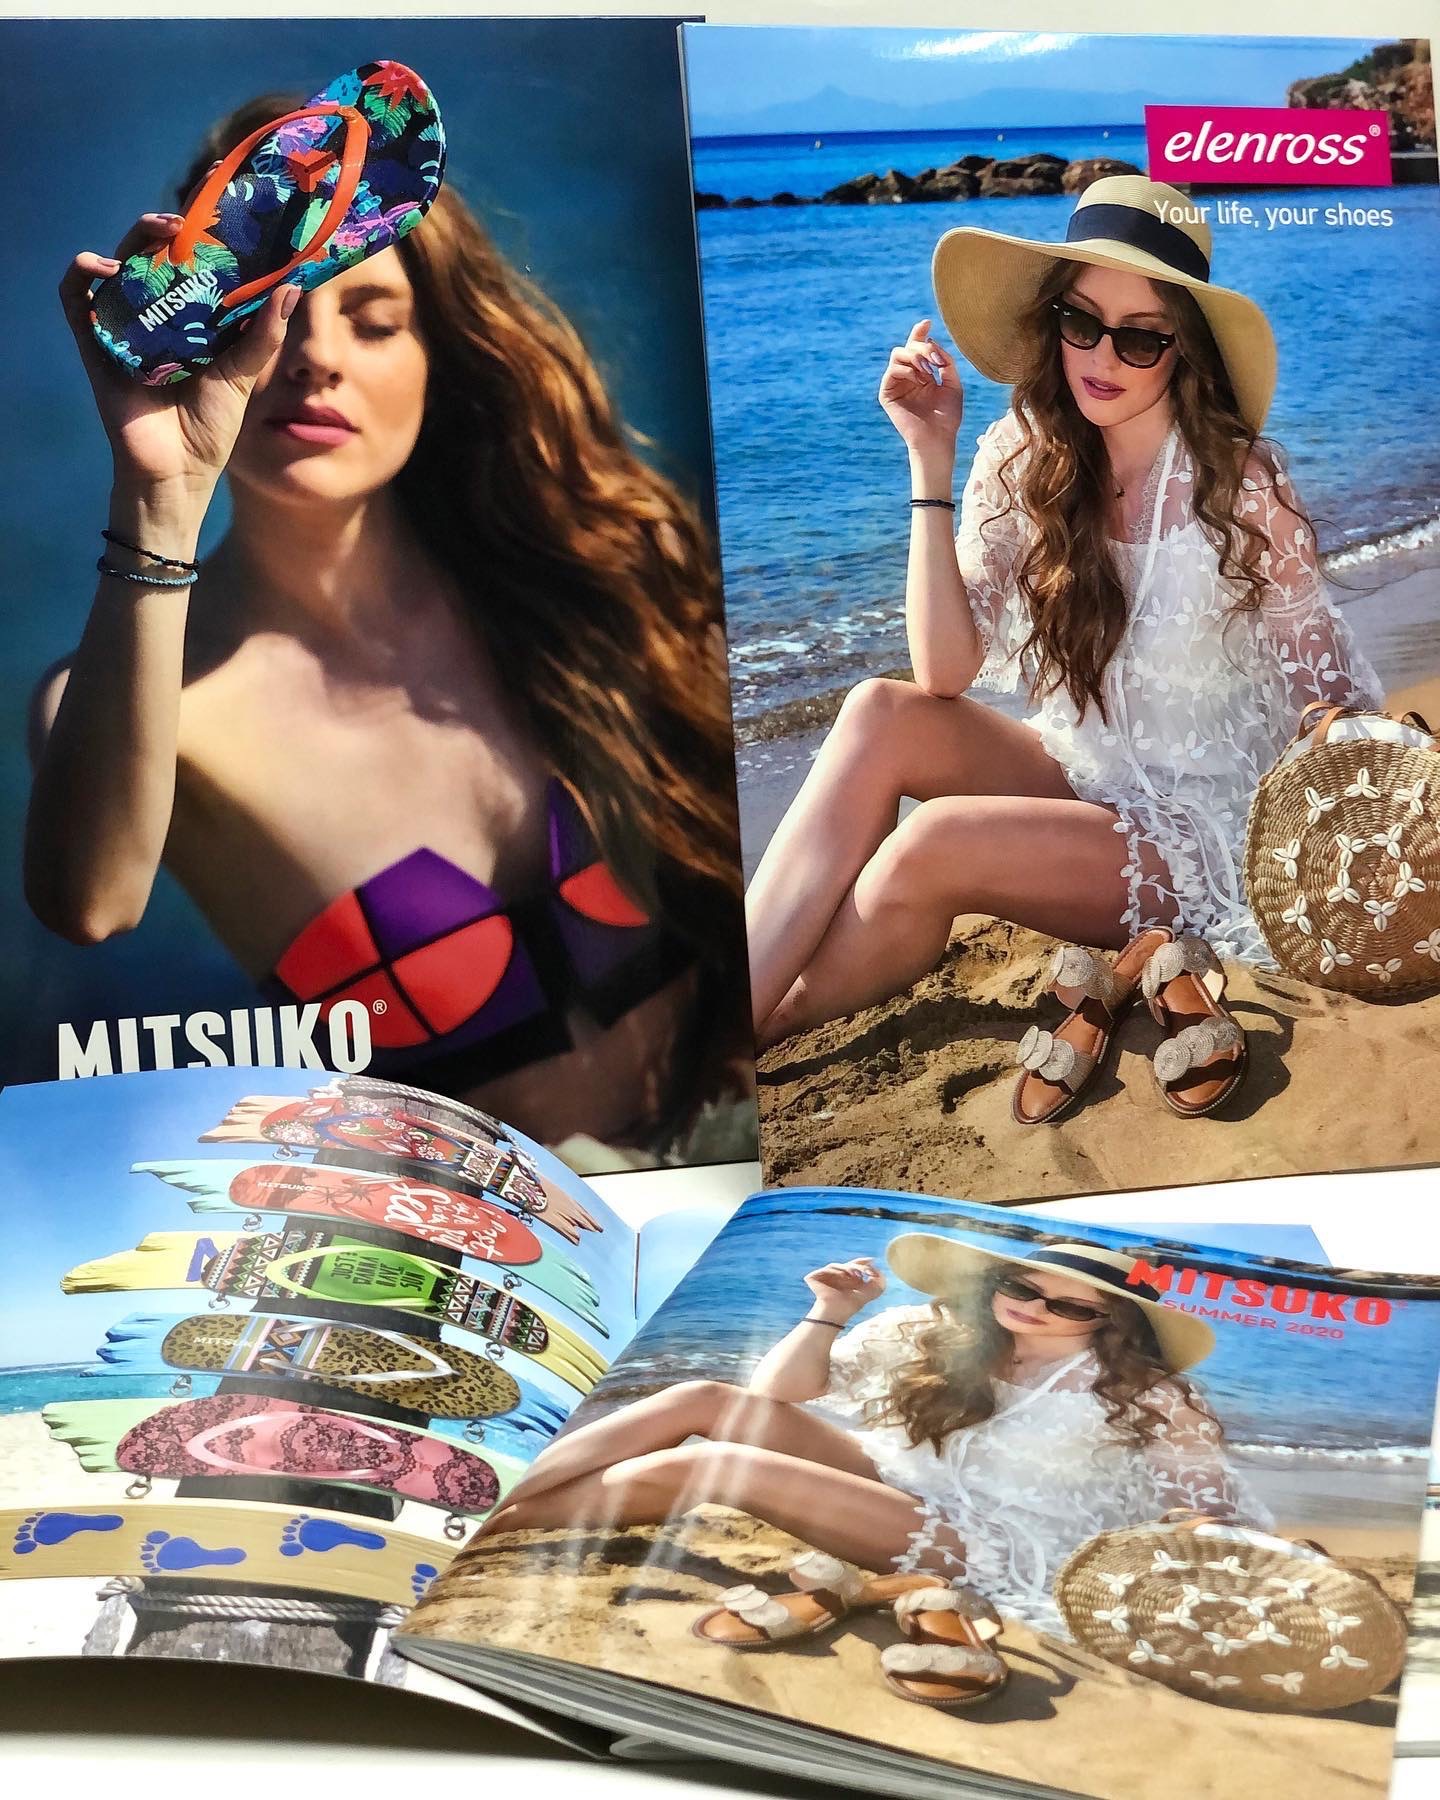 Mitsuko & Elenross Summer 2020 (Promotional Material)